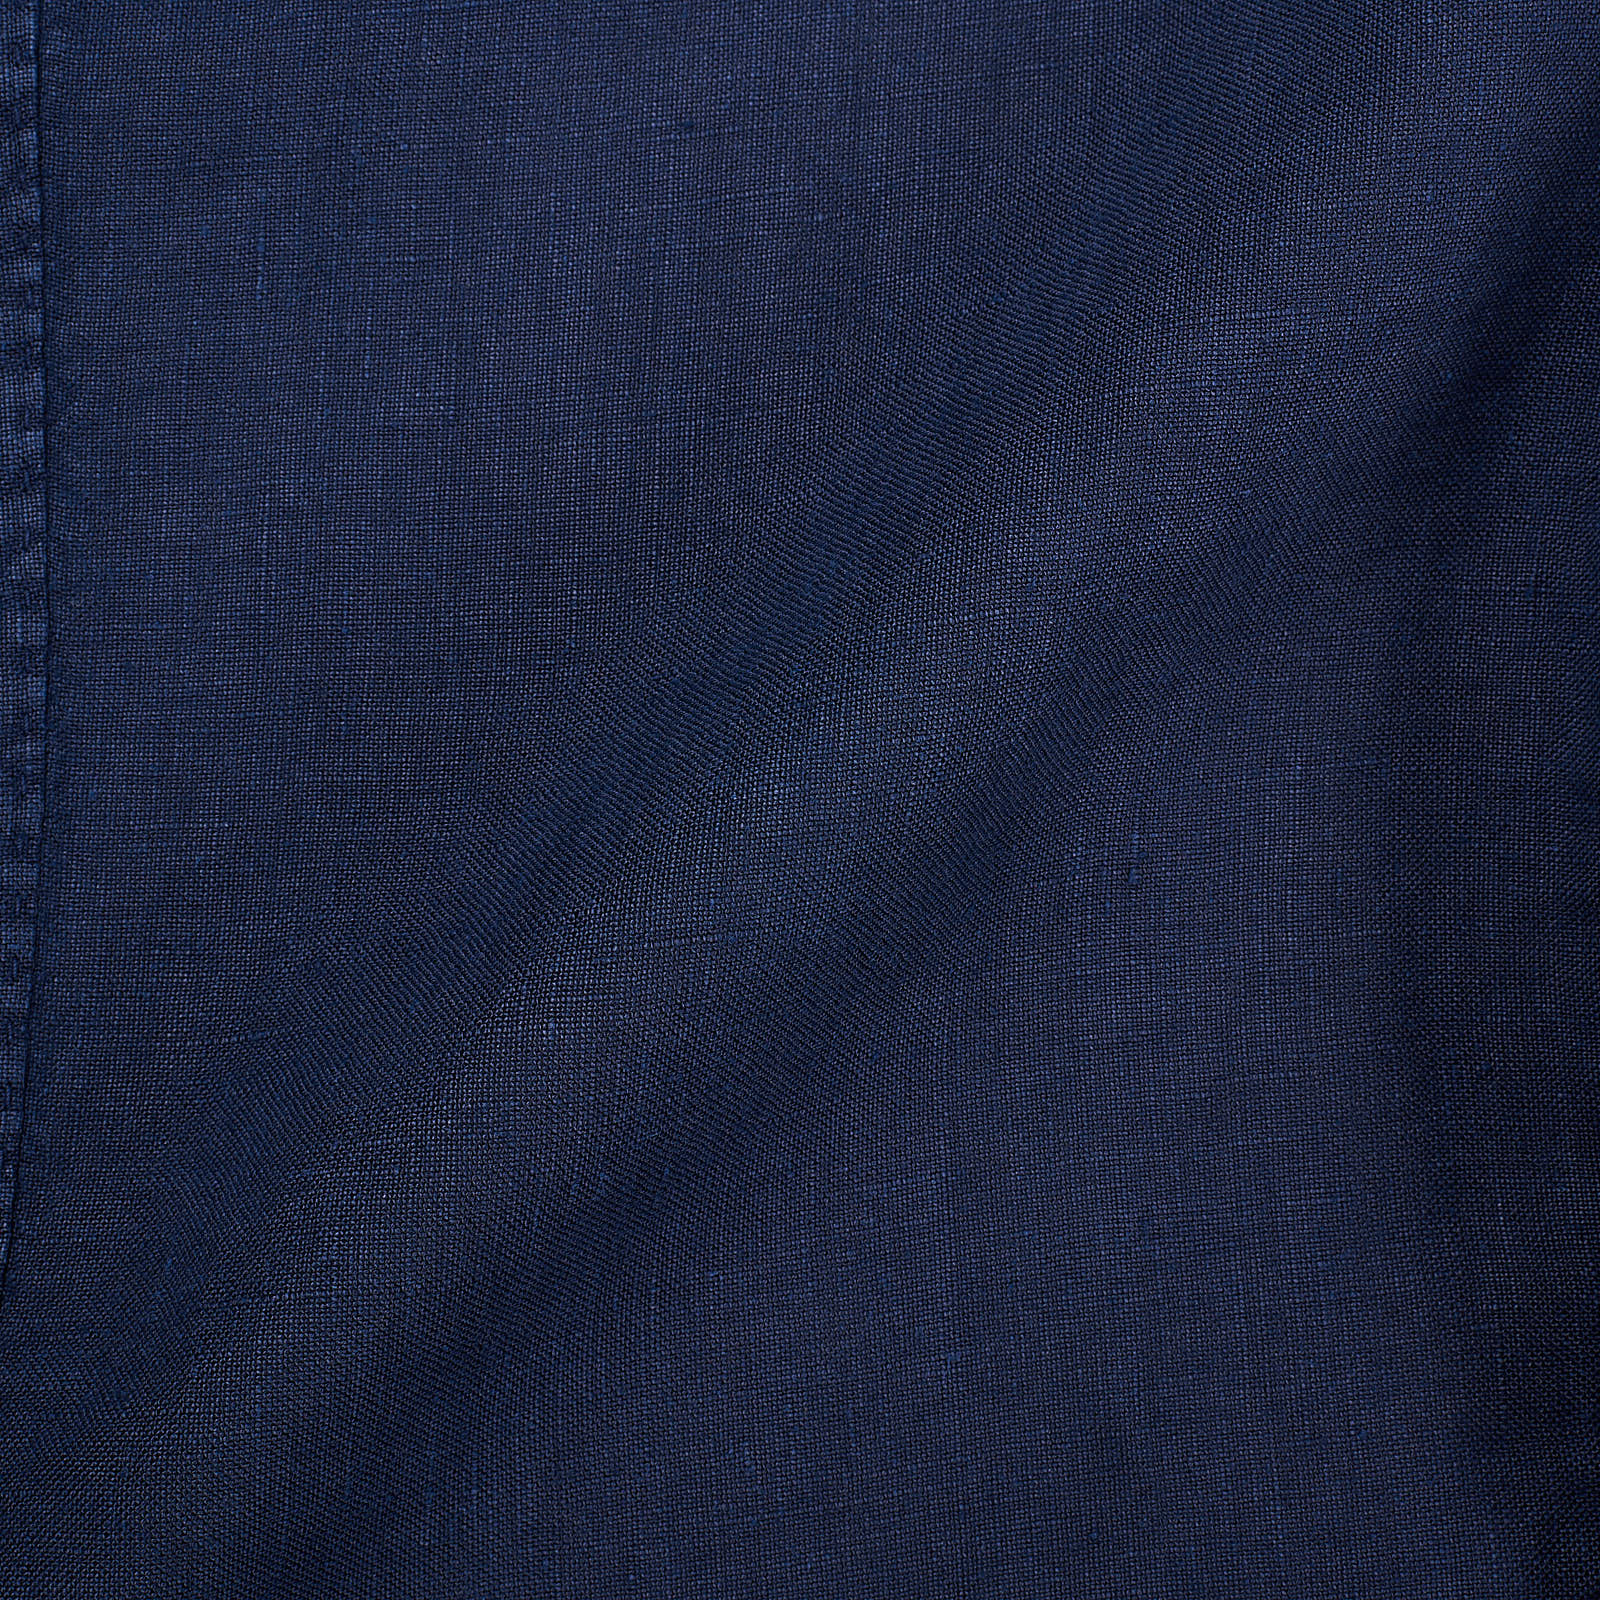 BOGLIOLI Milano "K. Jacket" Navy Blue Linen Unlined Suit EU 56 NEW US 46 Slim Fit